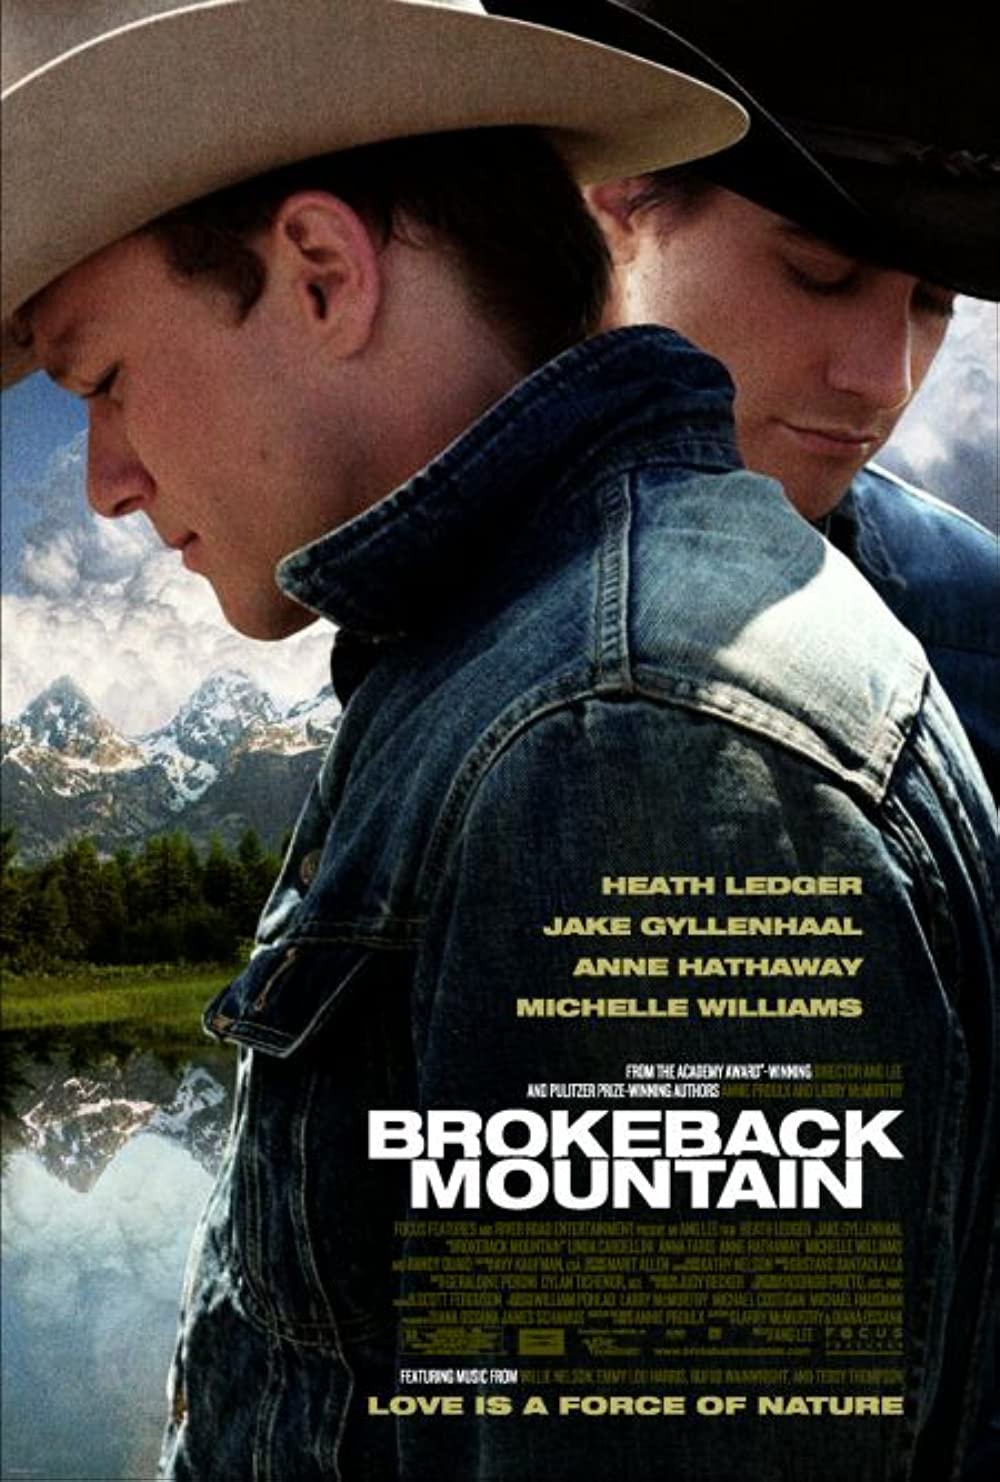 Filmbeschreibung zu Brokeback Mountain